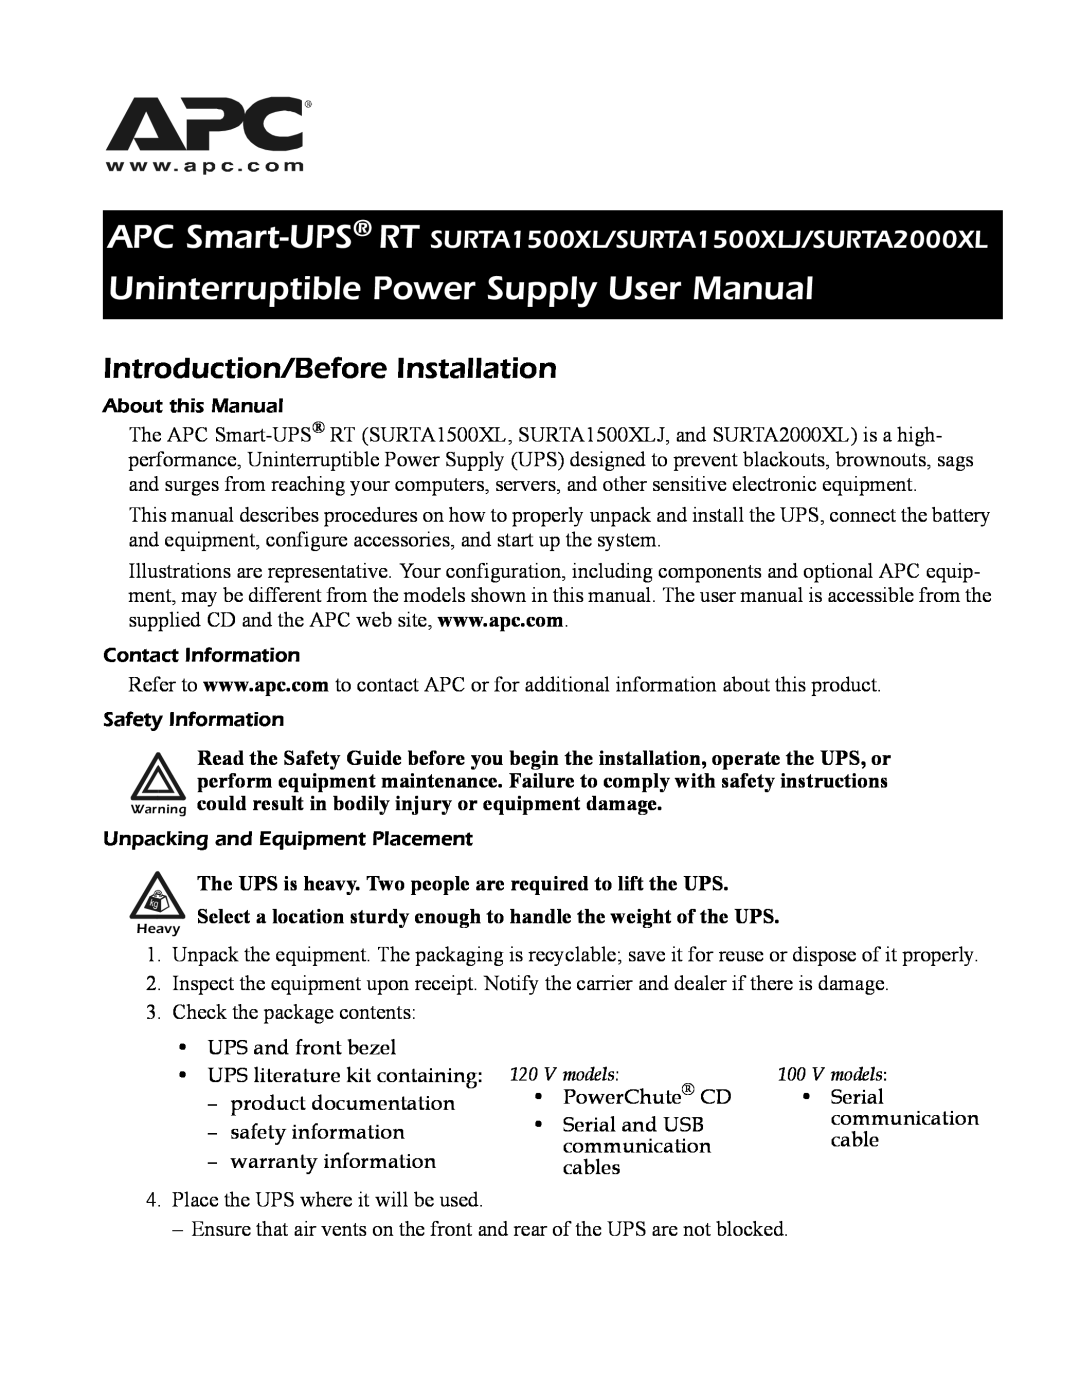 American Power Conversion SURTA1500XLJ, SURTA2000XL user manual Introduction/Before Installation 